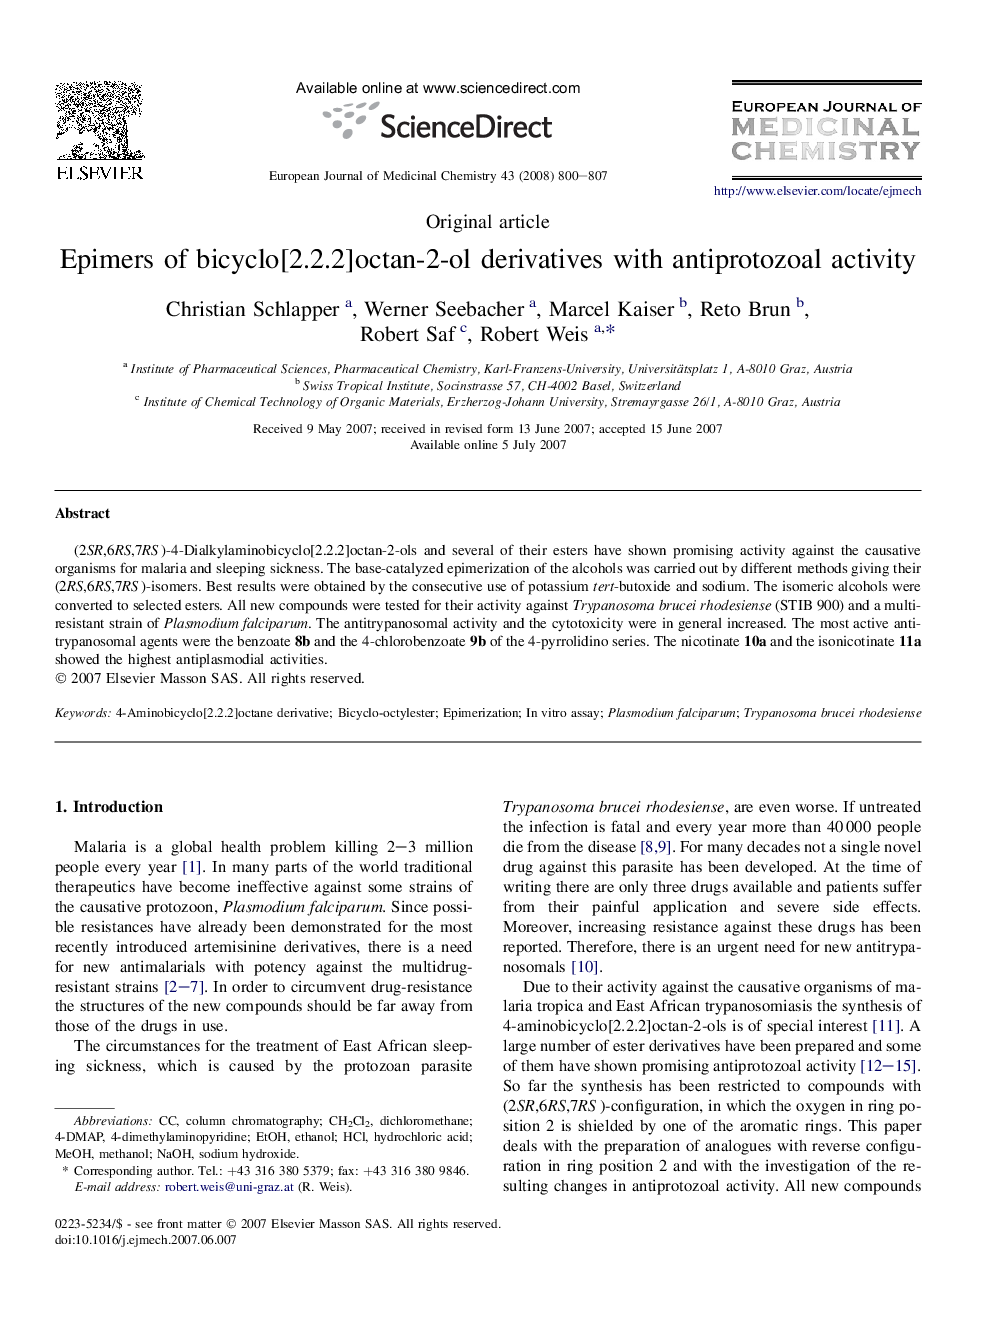 Epimers of bicyclo[2.2.2]octan-2-ol derivatives with antiprotozoal activity